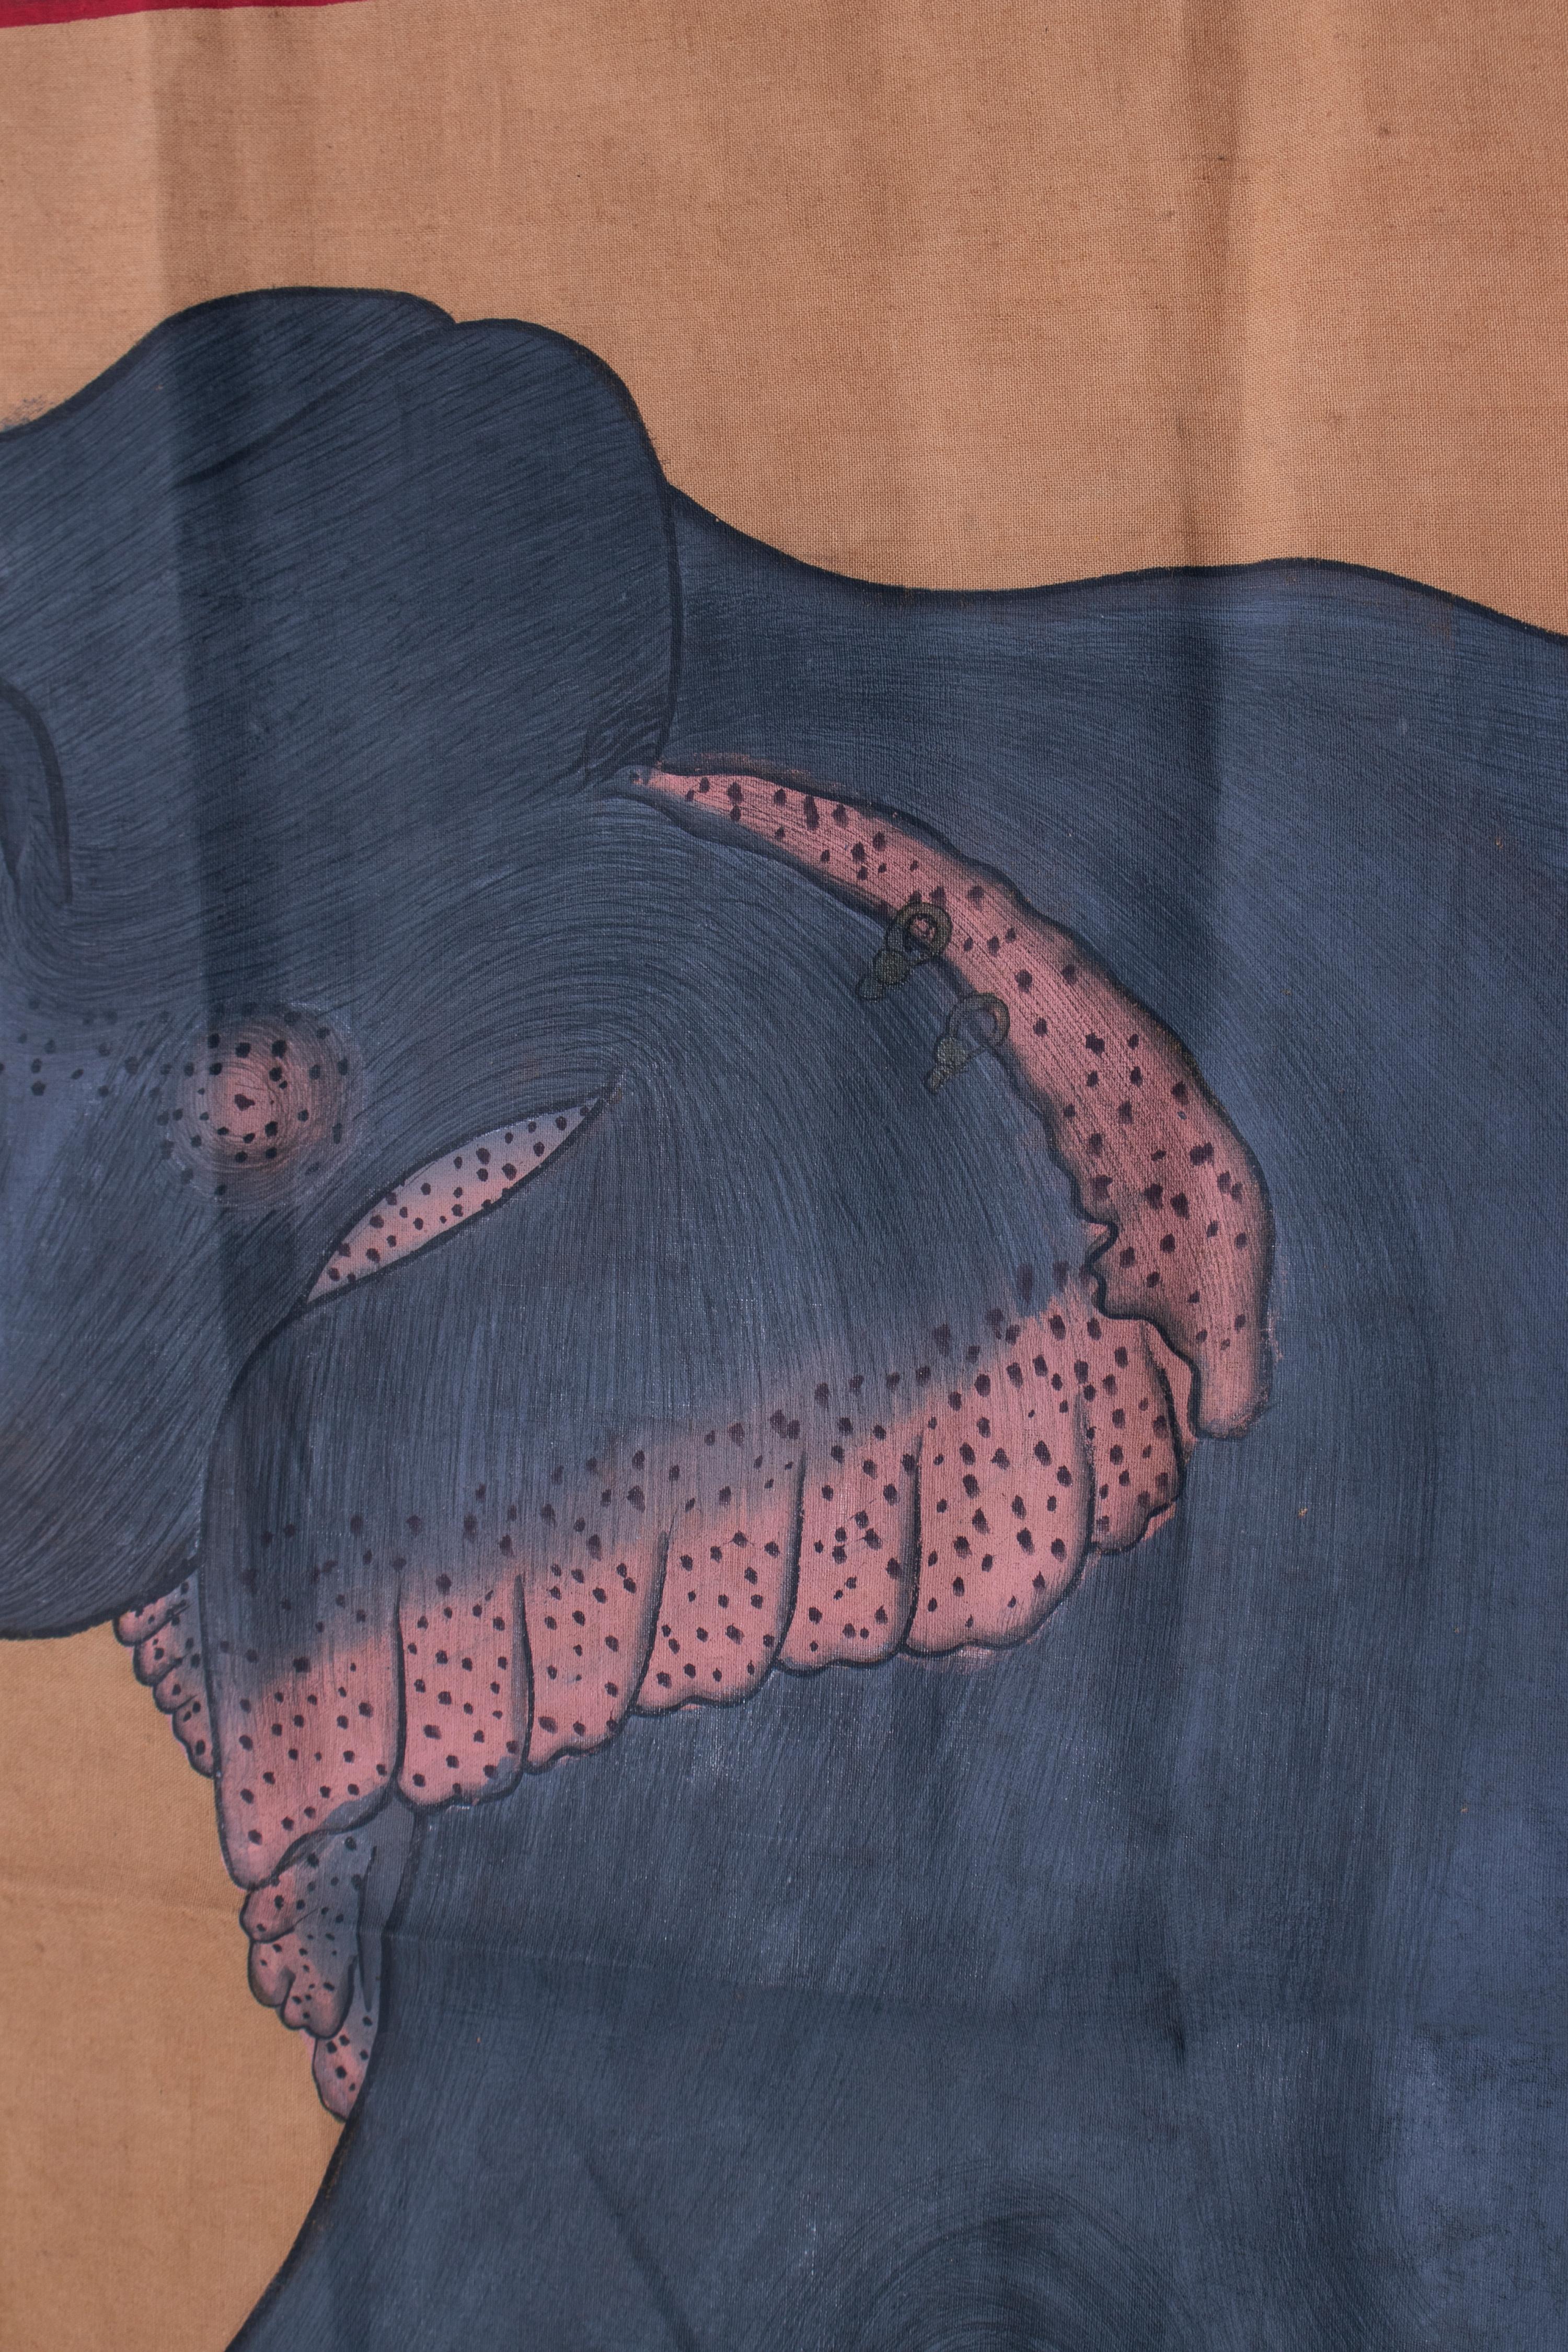 20th Century 1970s Jaime Parlade Designer Hand Drawn Elephant on Canvas